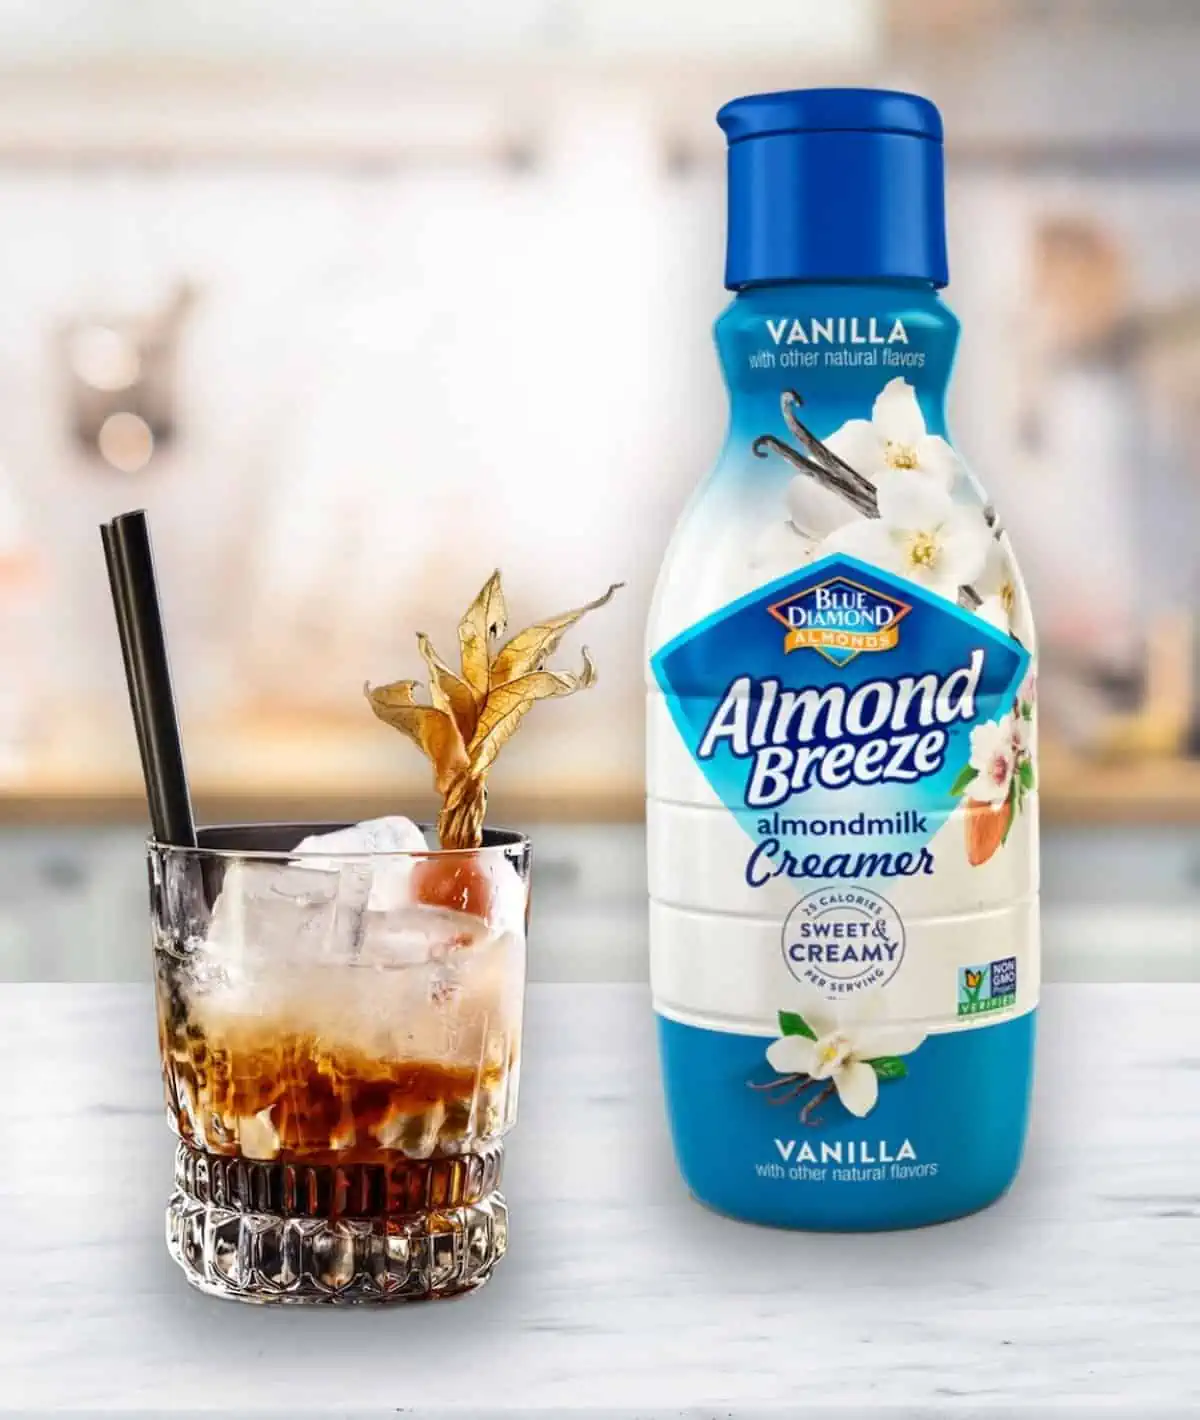 Bottle of Almond Breeze Vanilla almondmilk creamer next to a glass of iced espresso.